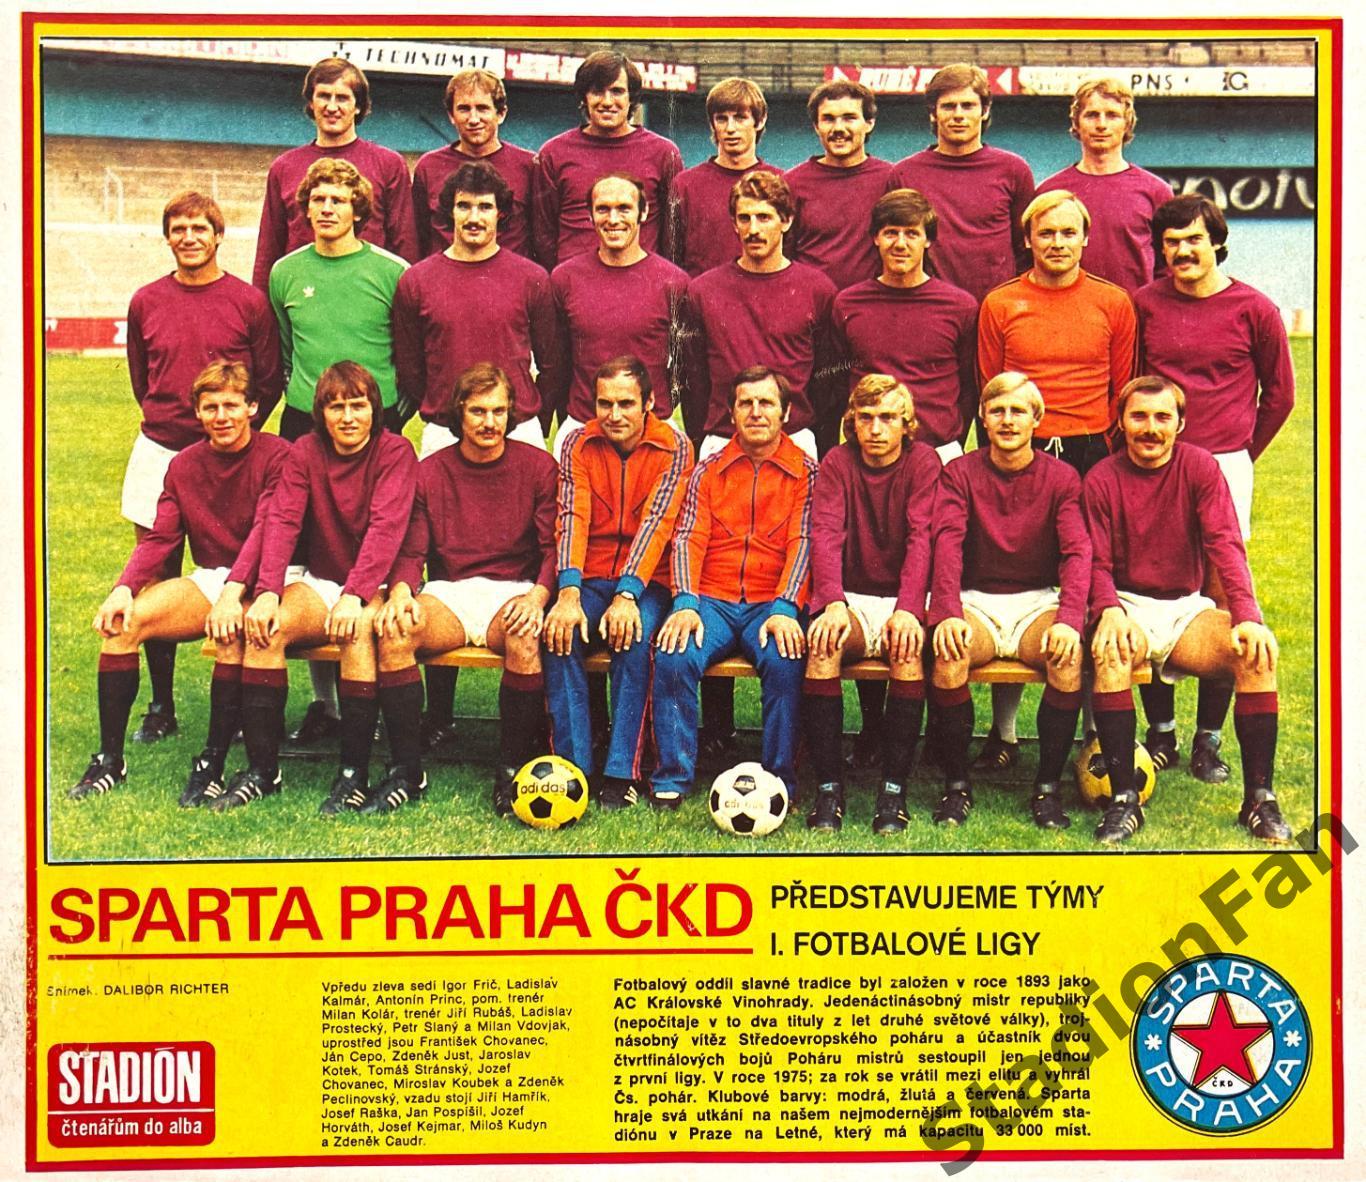 Постер из журнала Stadion (Стадион) - Sparta Praha,1978.